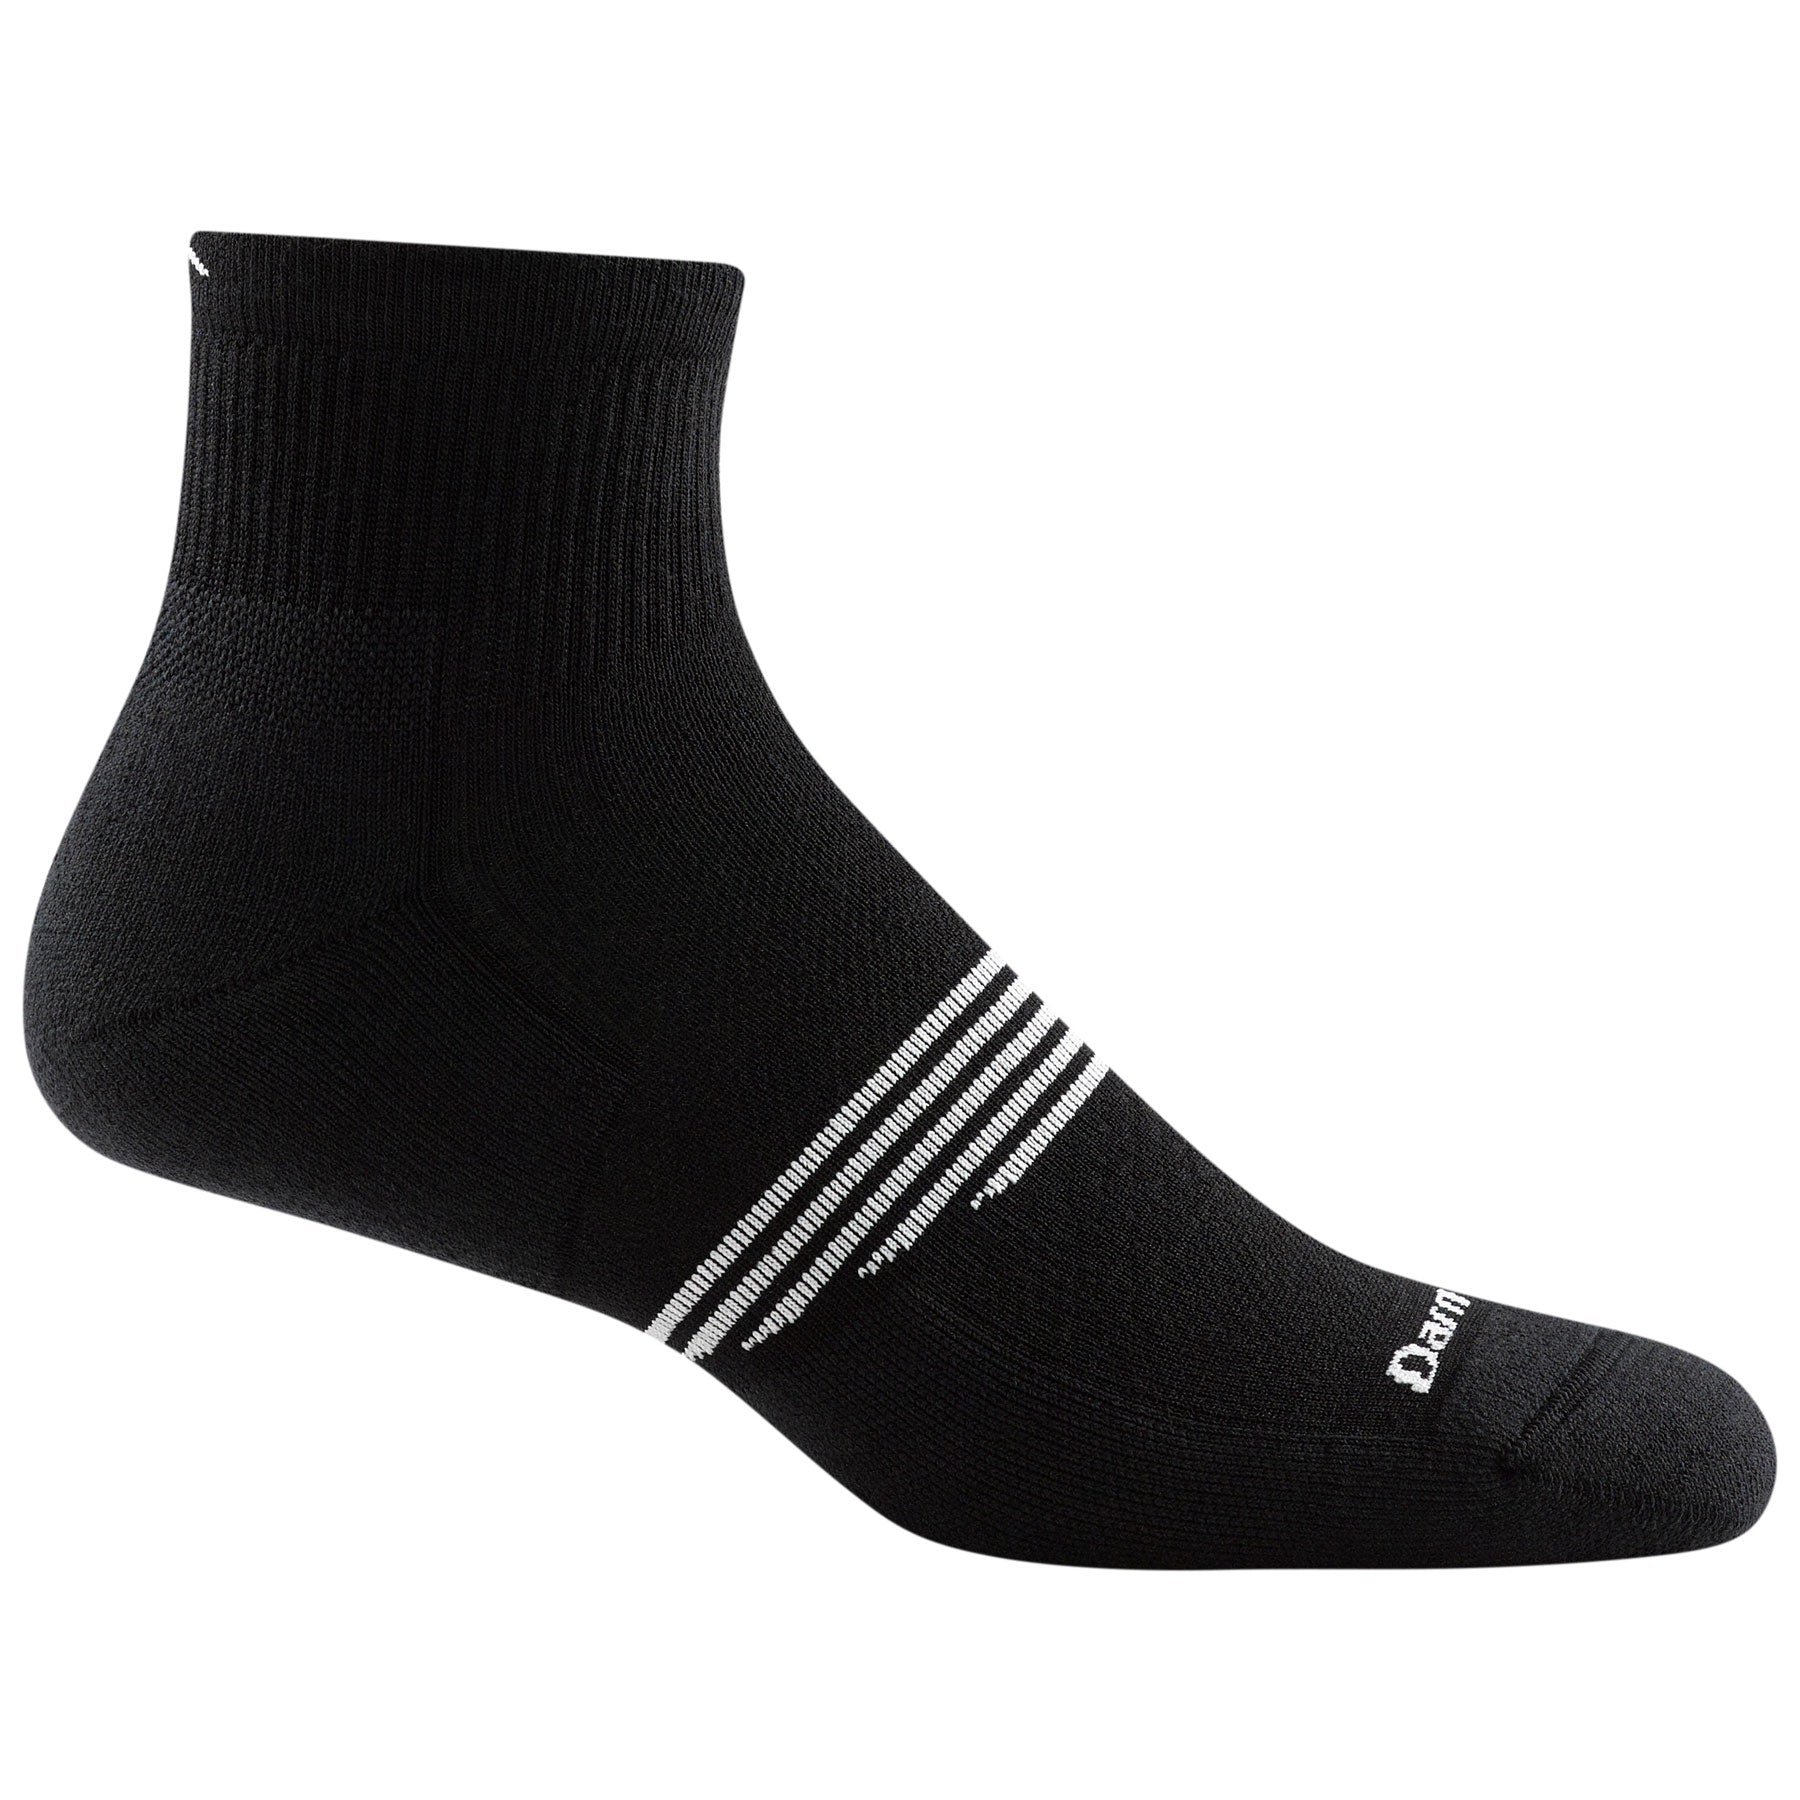 Darn Tough 1102 black Quarter ankle sock